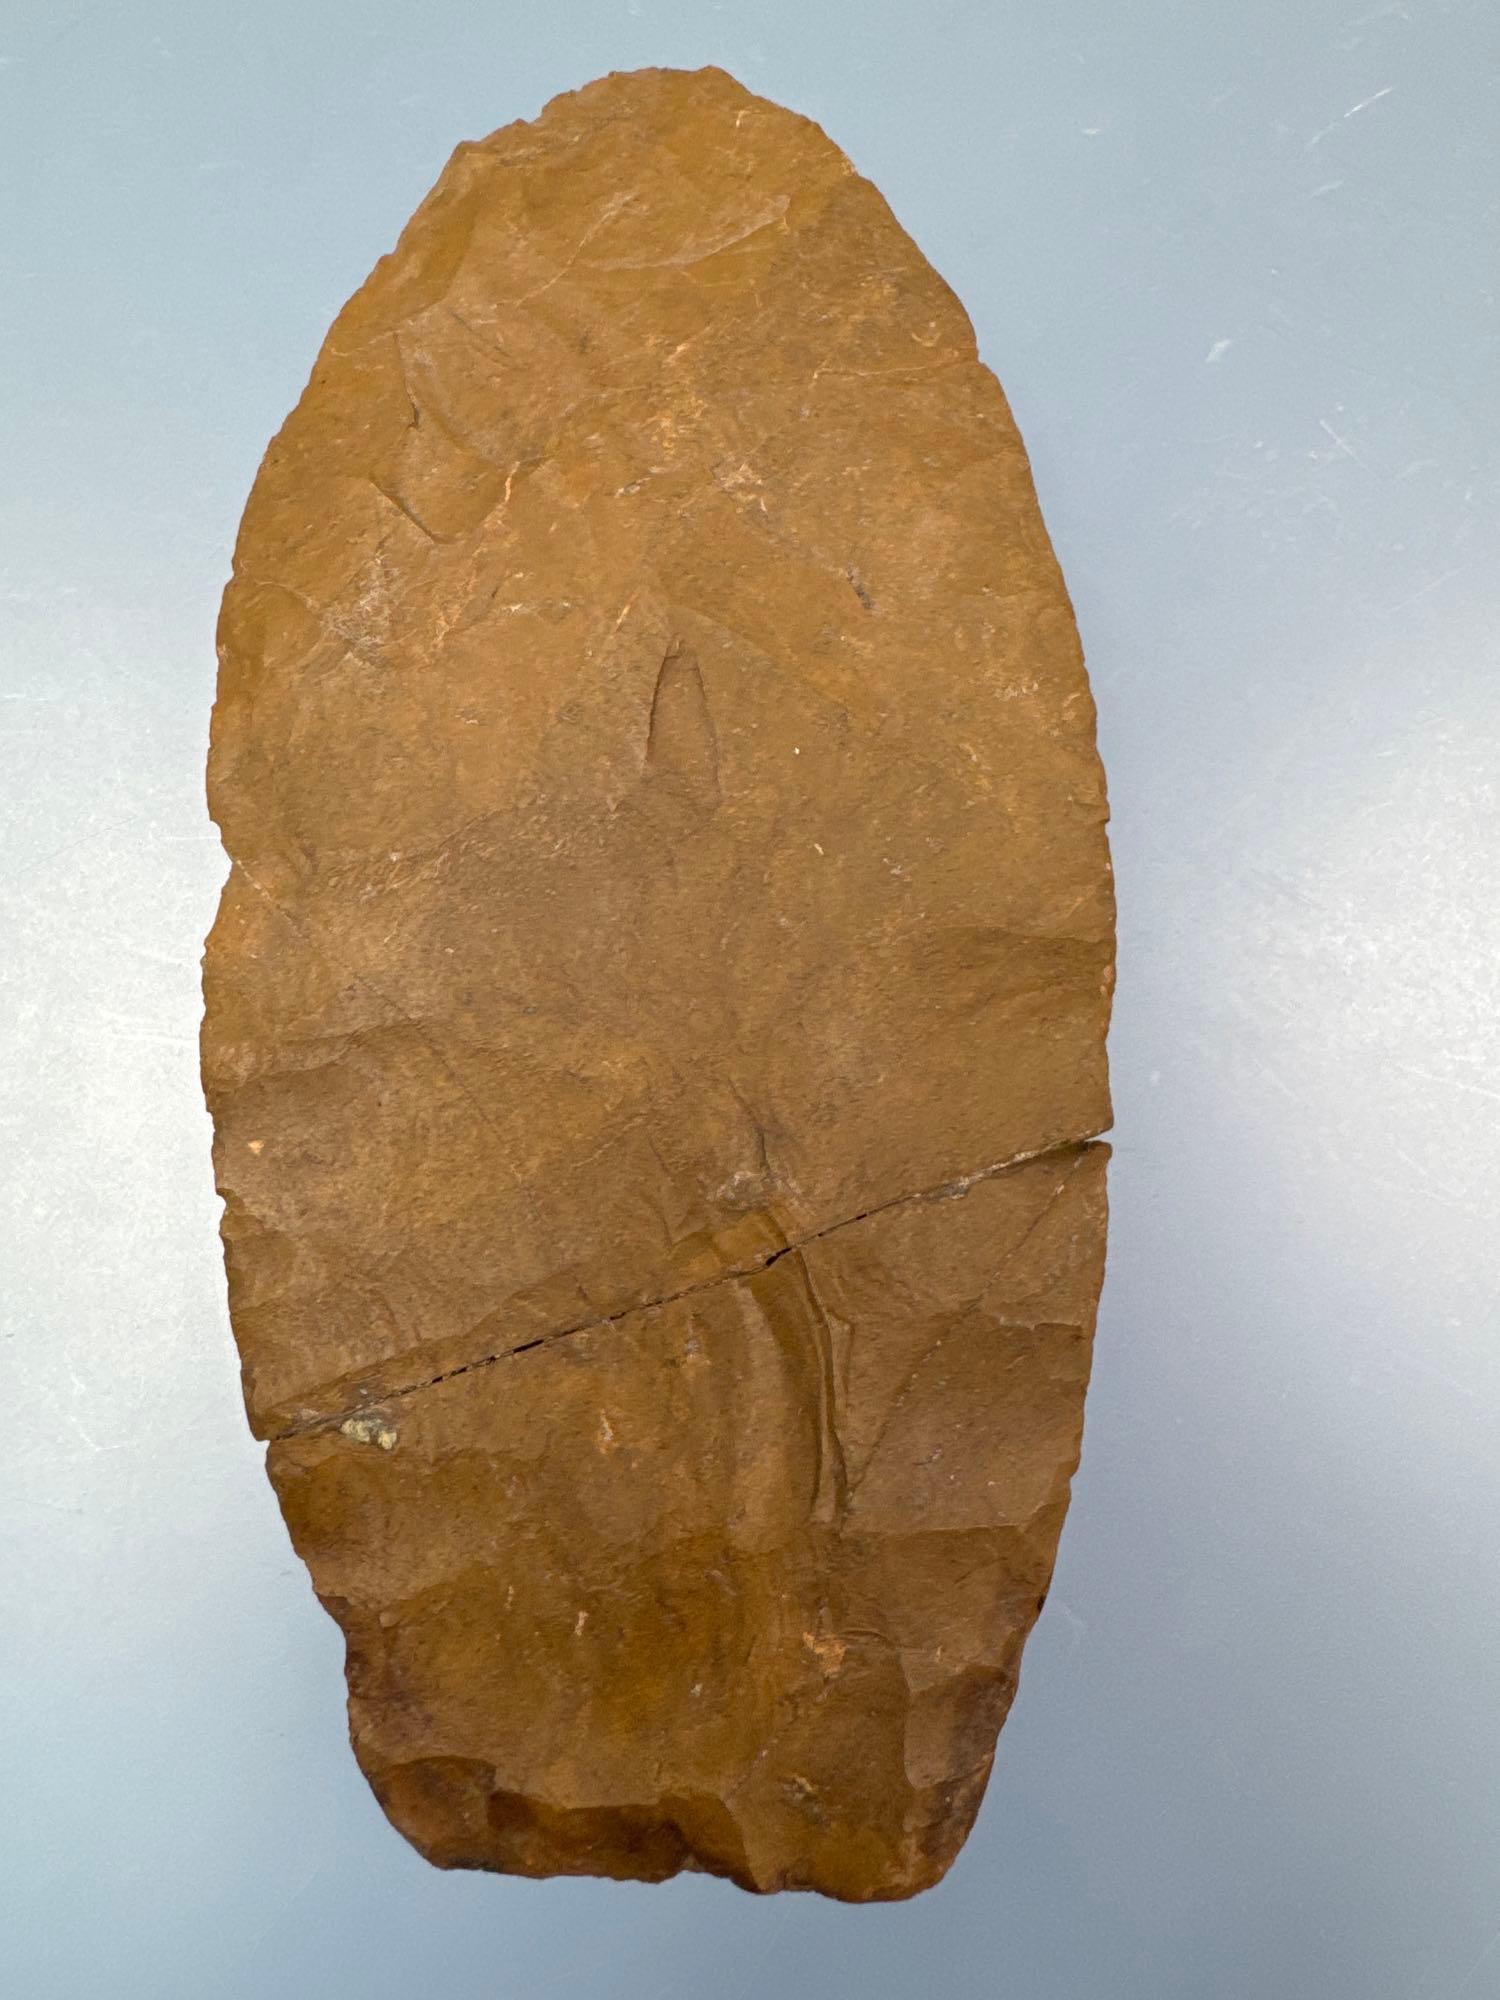 LARGE 5 5/8" Jasper Petalas Blade, Broken+Reguled, Found in Berks Co., PA, Ex: Pat Sutton Collection